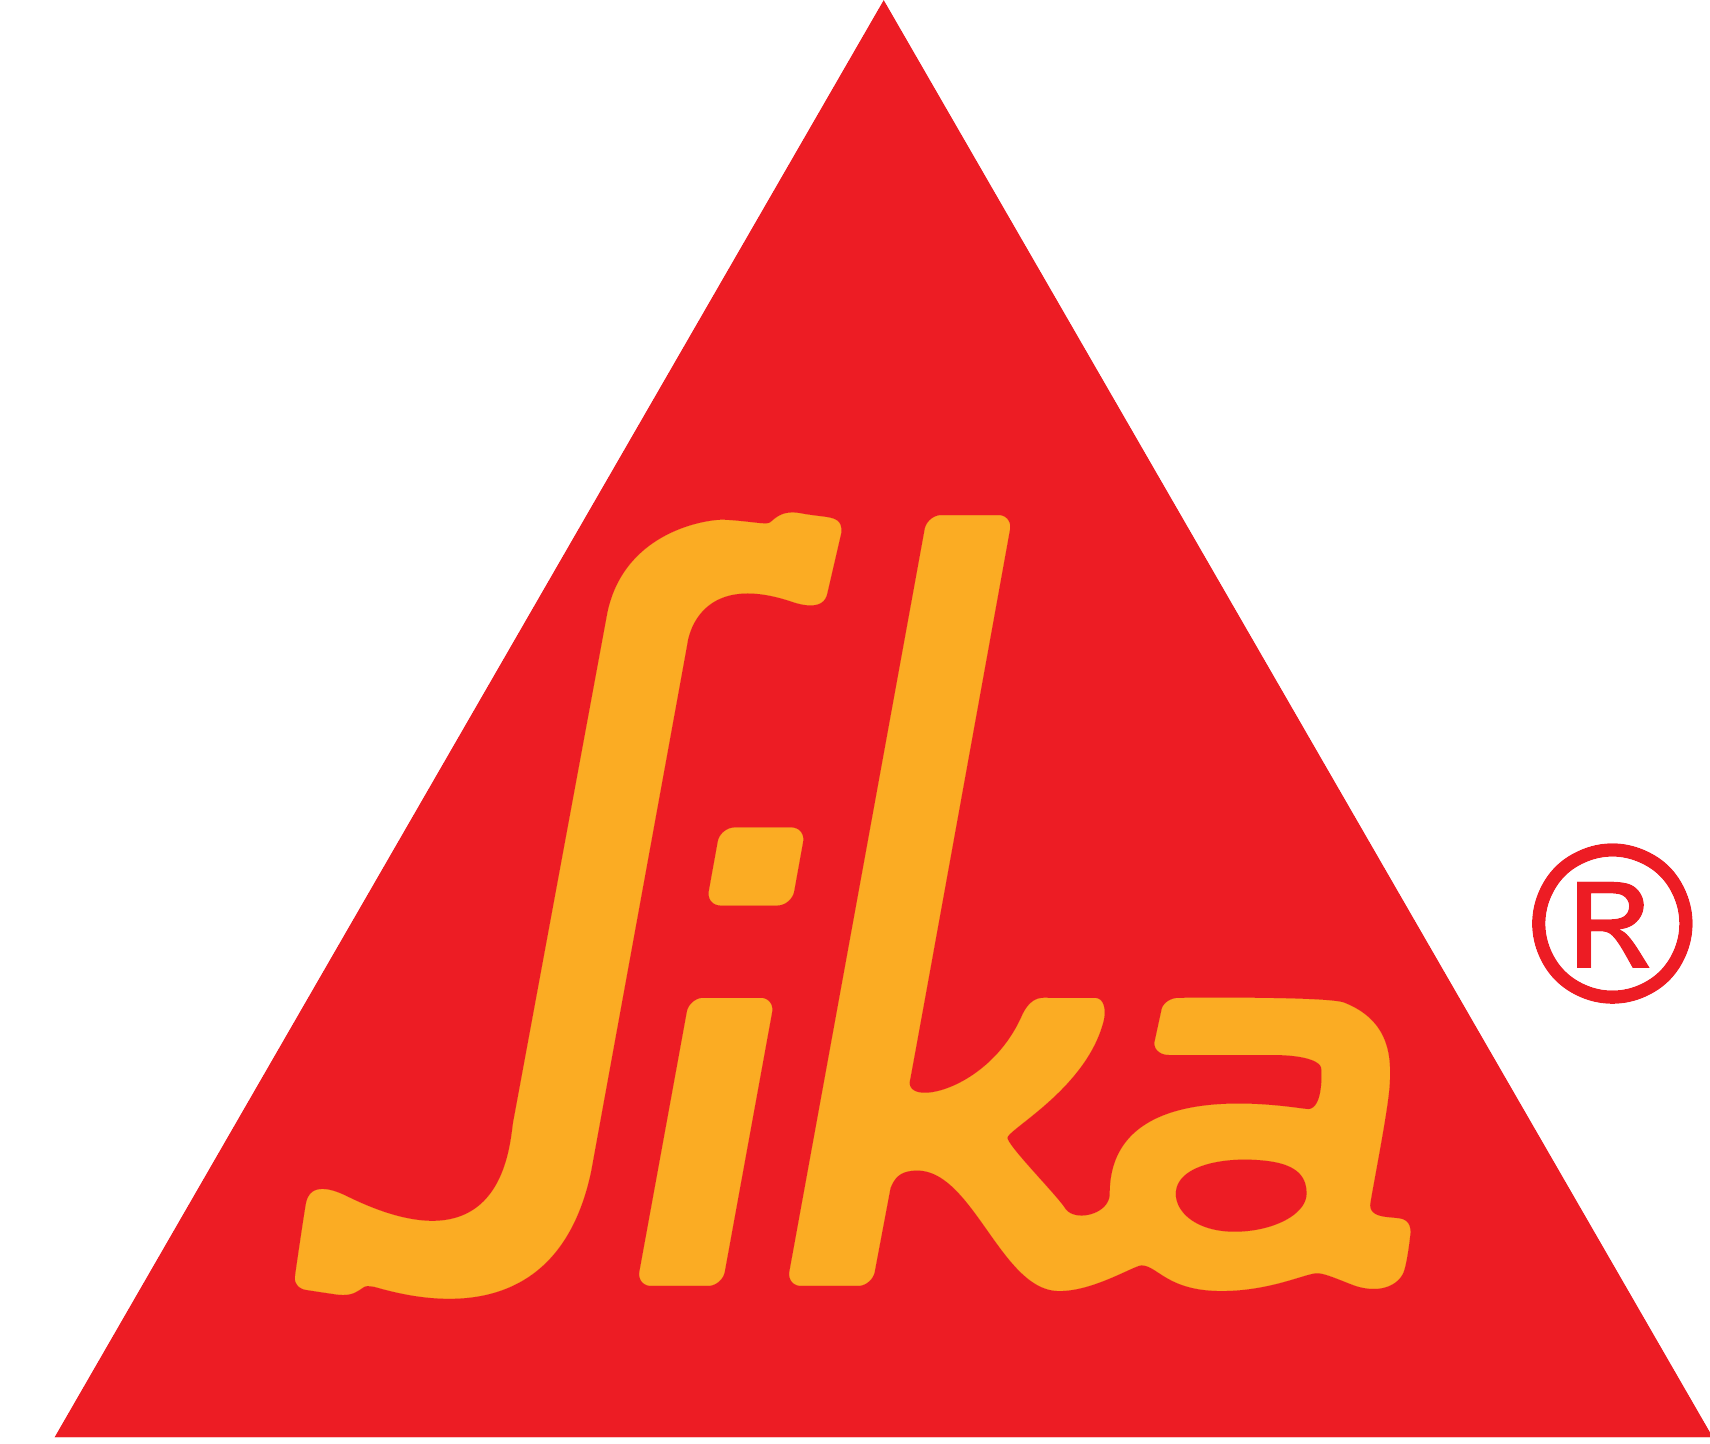 glo-sika-logo-slogan-no-background